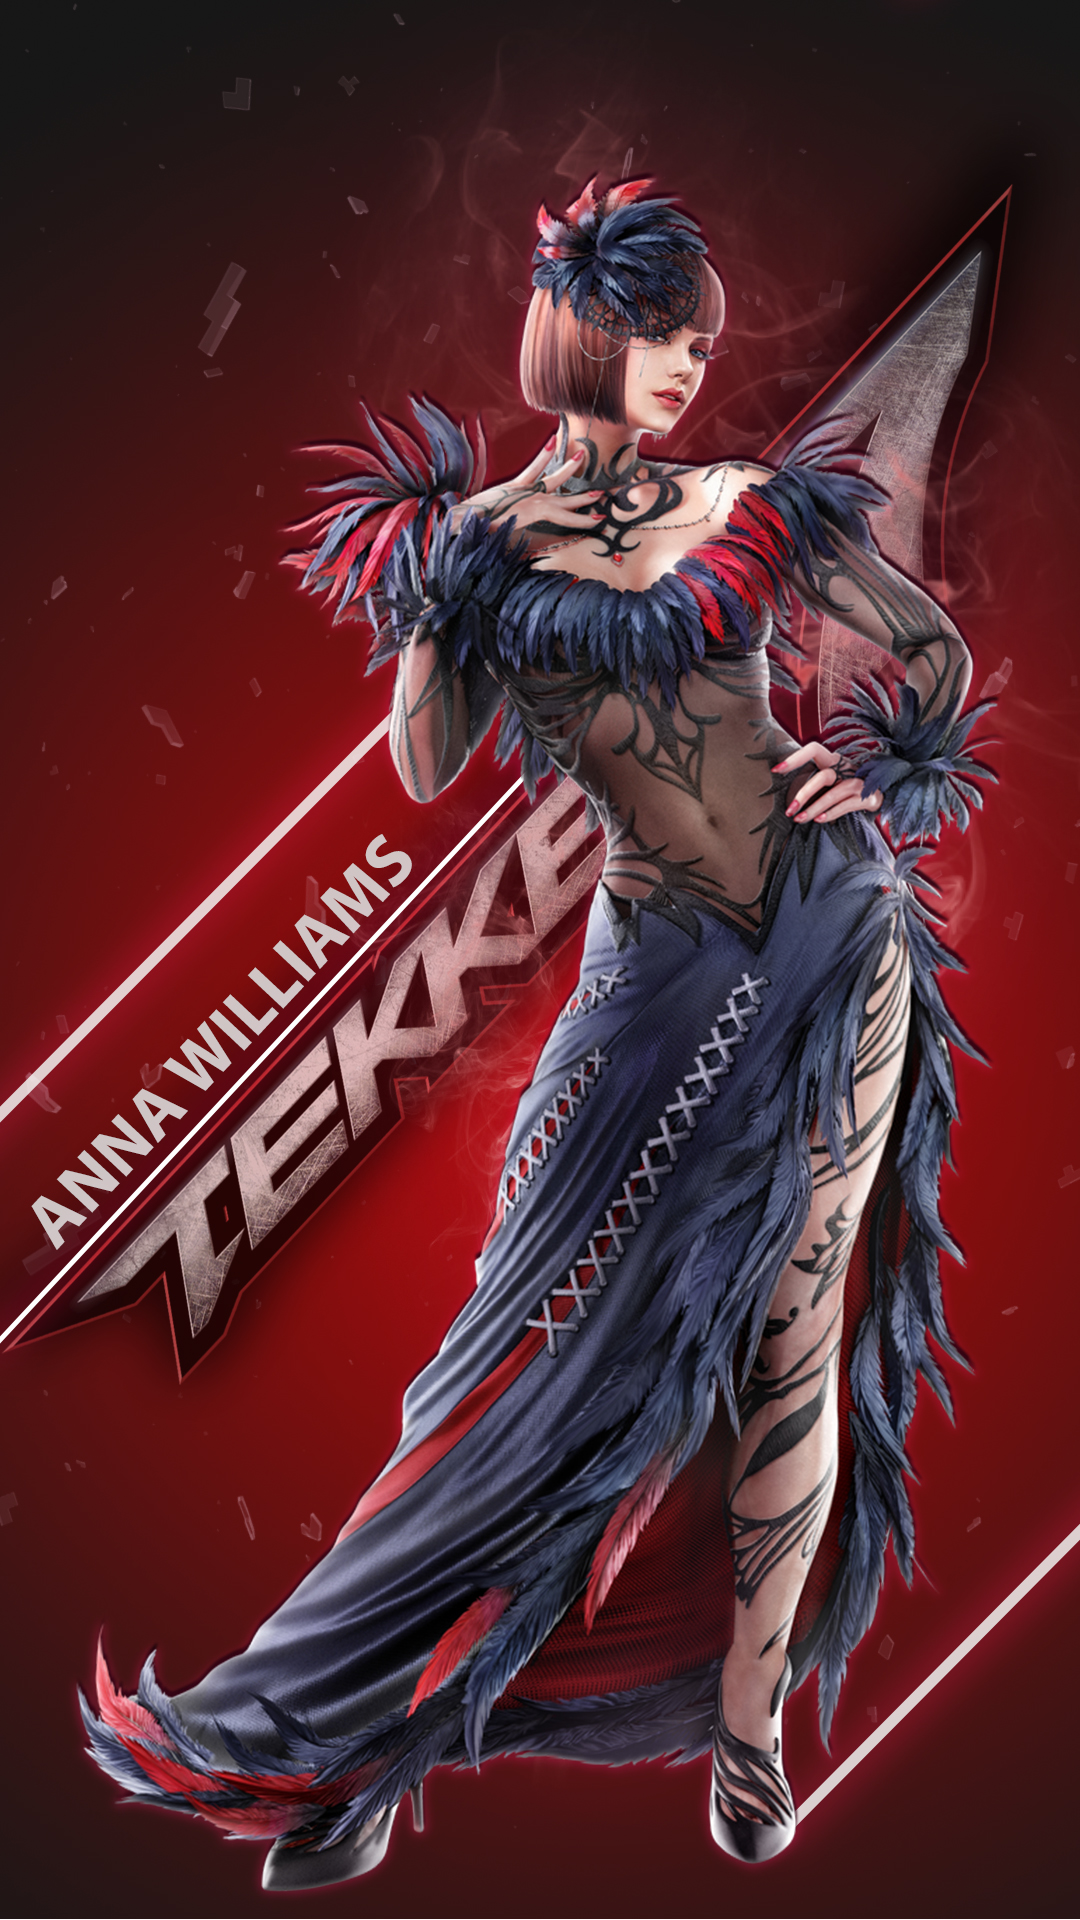 Tekken 7 Phone Wallpaper - Anna williams by CR1 - Mobile Abyss